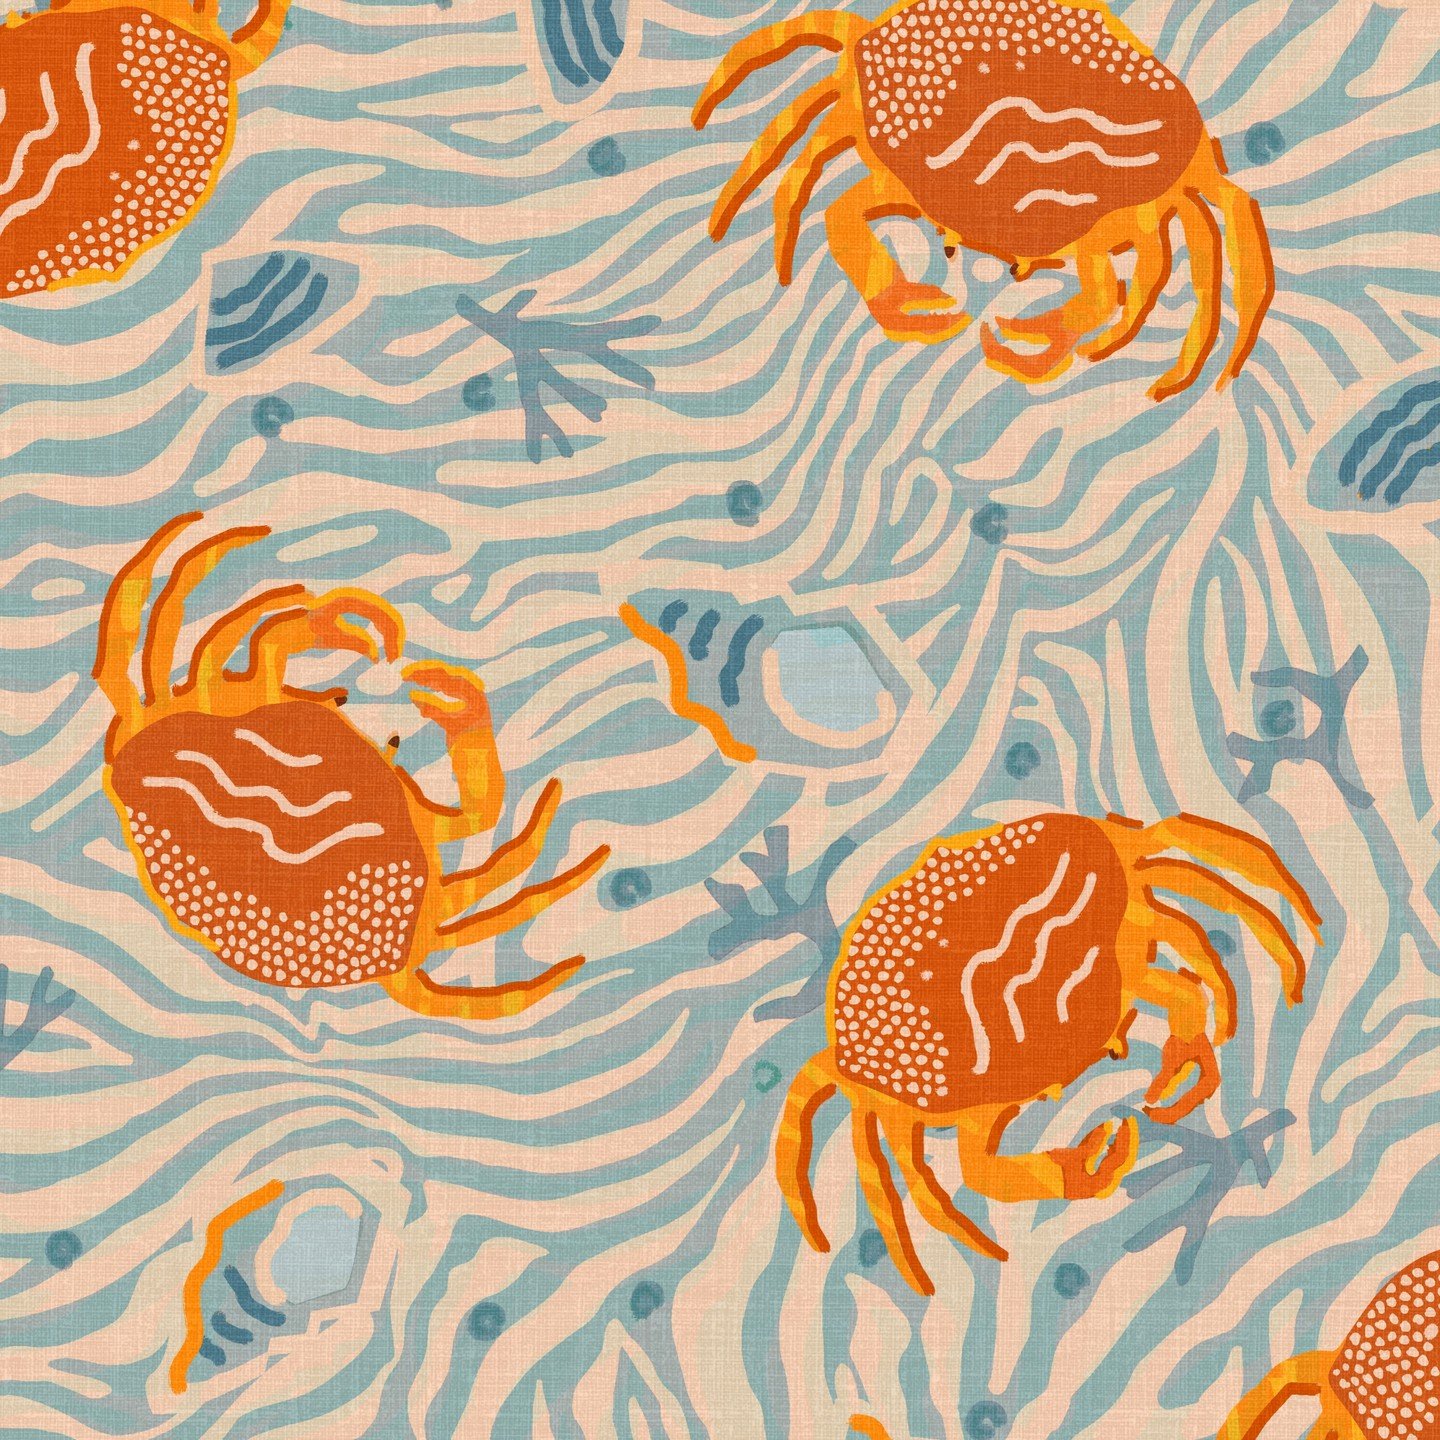 Feeling crabby, version 1. 

#spoonflower #spoonflowerchallenge #spoonflowerfabric #surfacepatterndesign #surfacepatterndesigner #fabric #fabricdesign #pattern #print #printandpattern #surfacedesigner #patternlove #illustration #artlicensing #textile